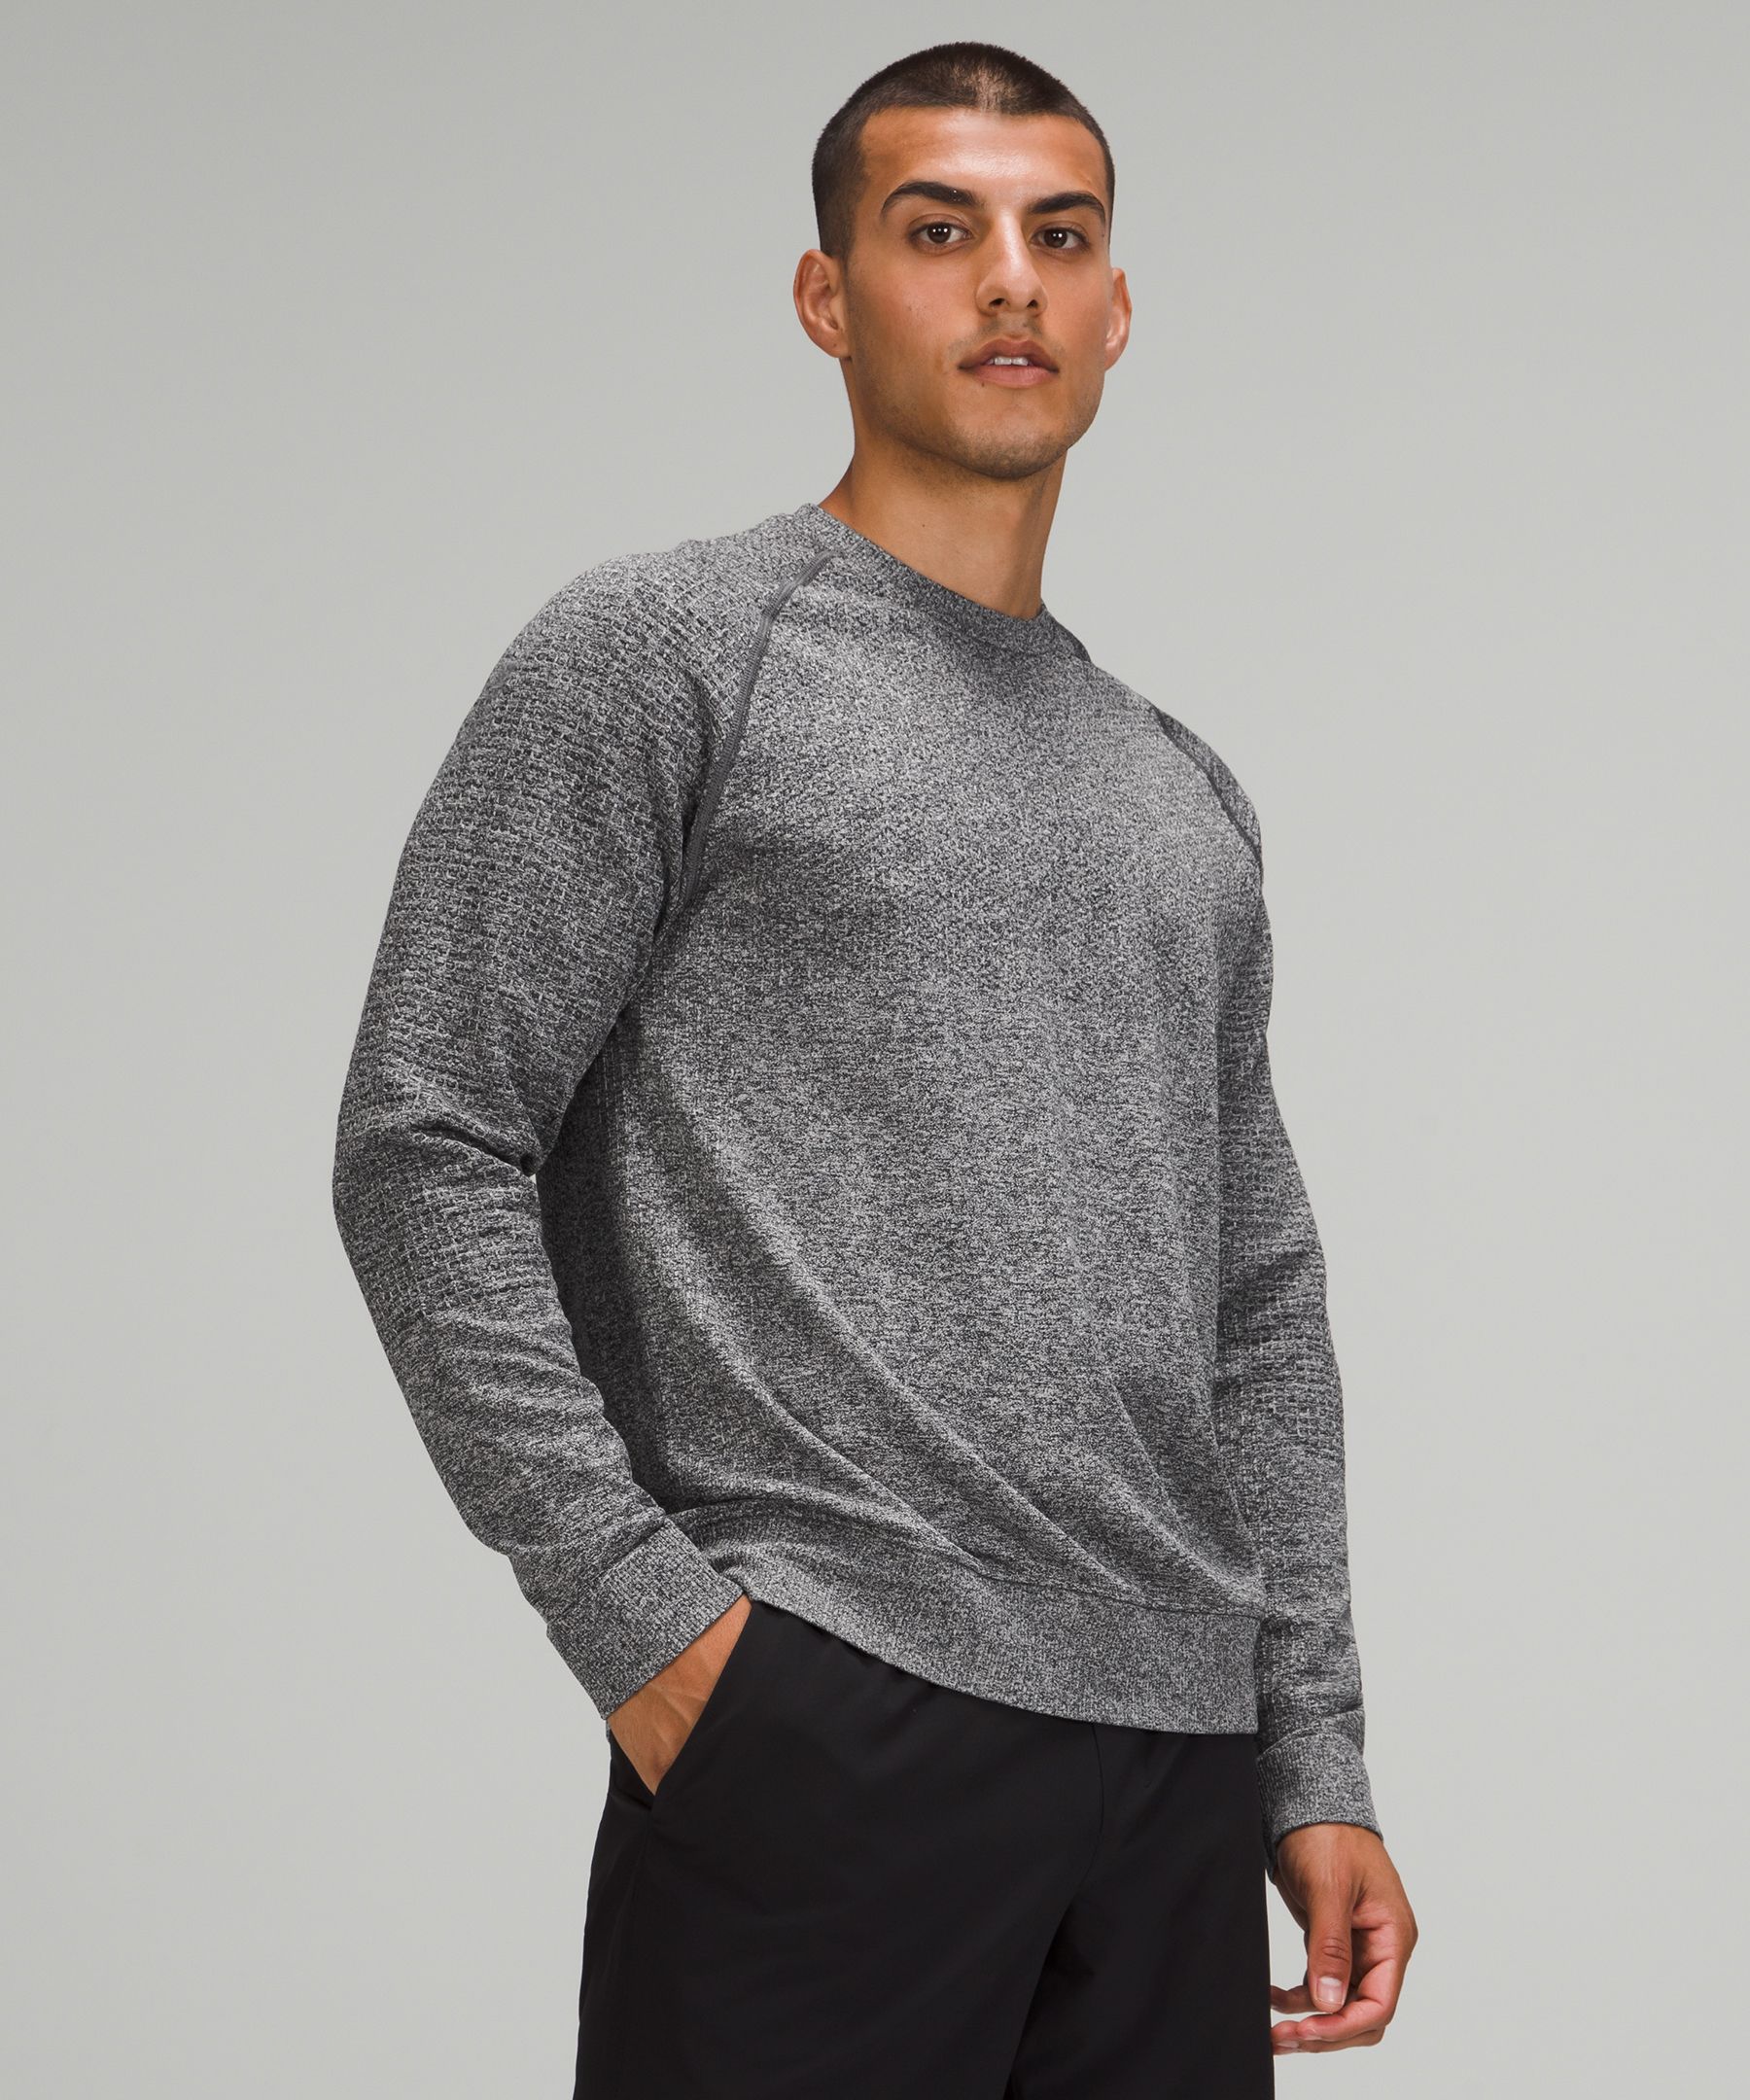 Engineered Warmth Long Sleeve Crew | Men's Hoodies & Sweatshirts 